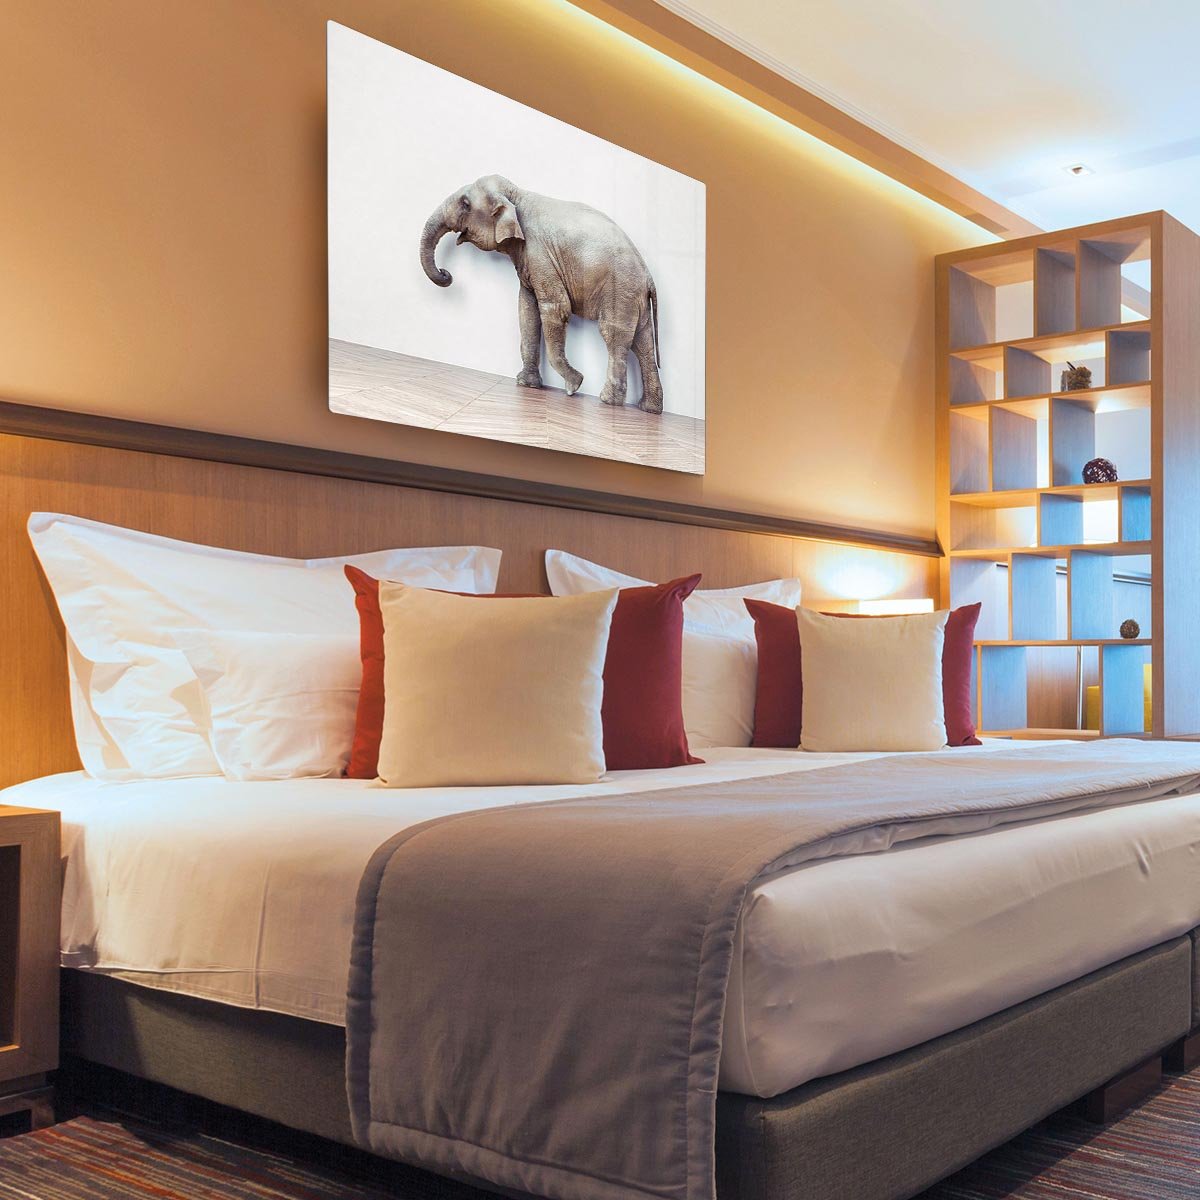 The elephant calm in the room near white wall HD Metal Print - Canvas Art Rocks - 3